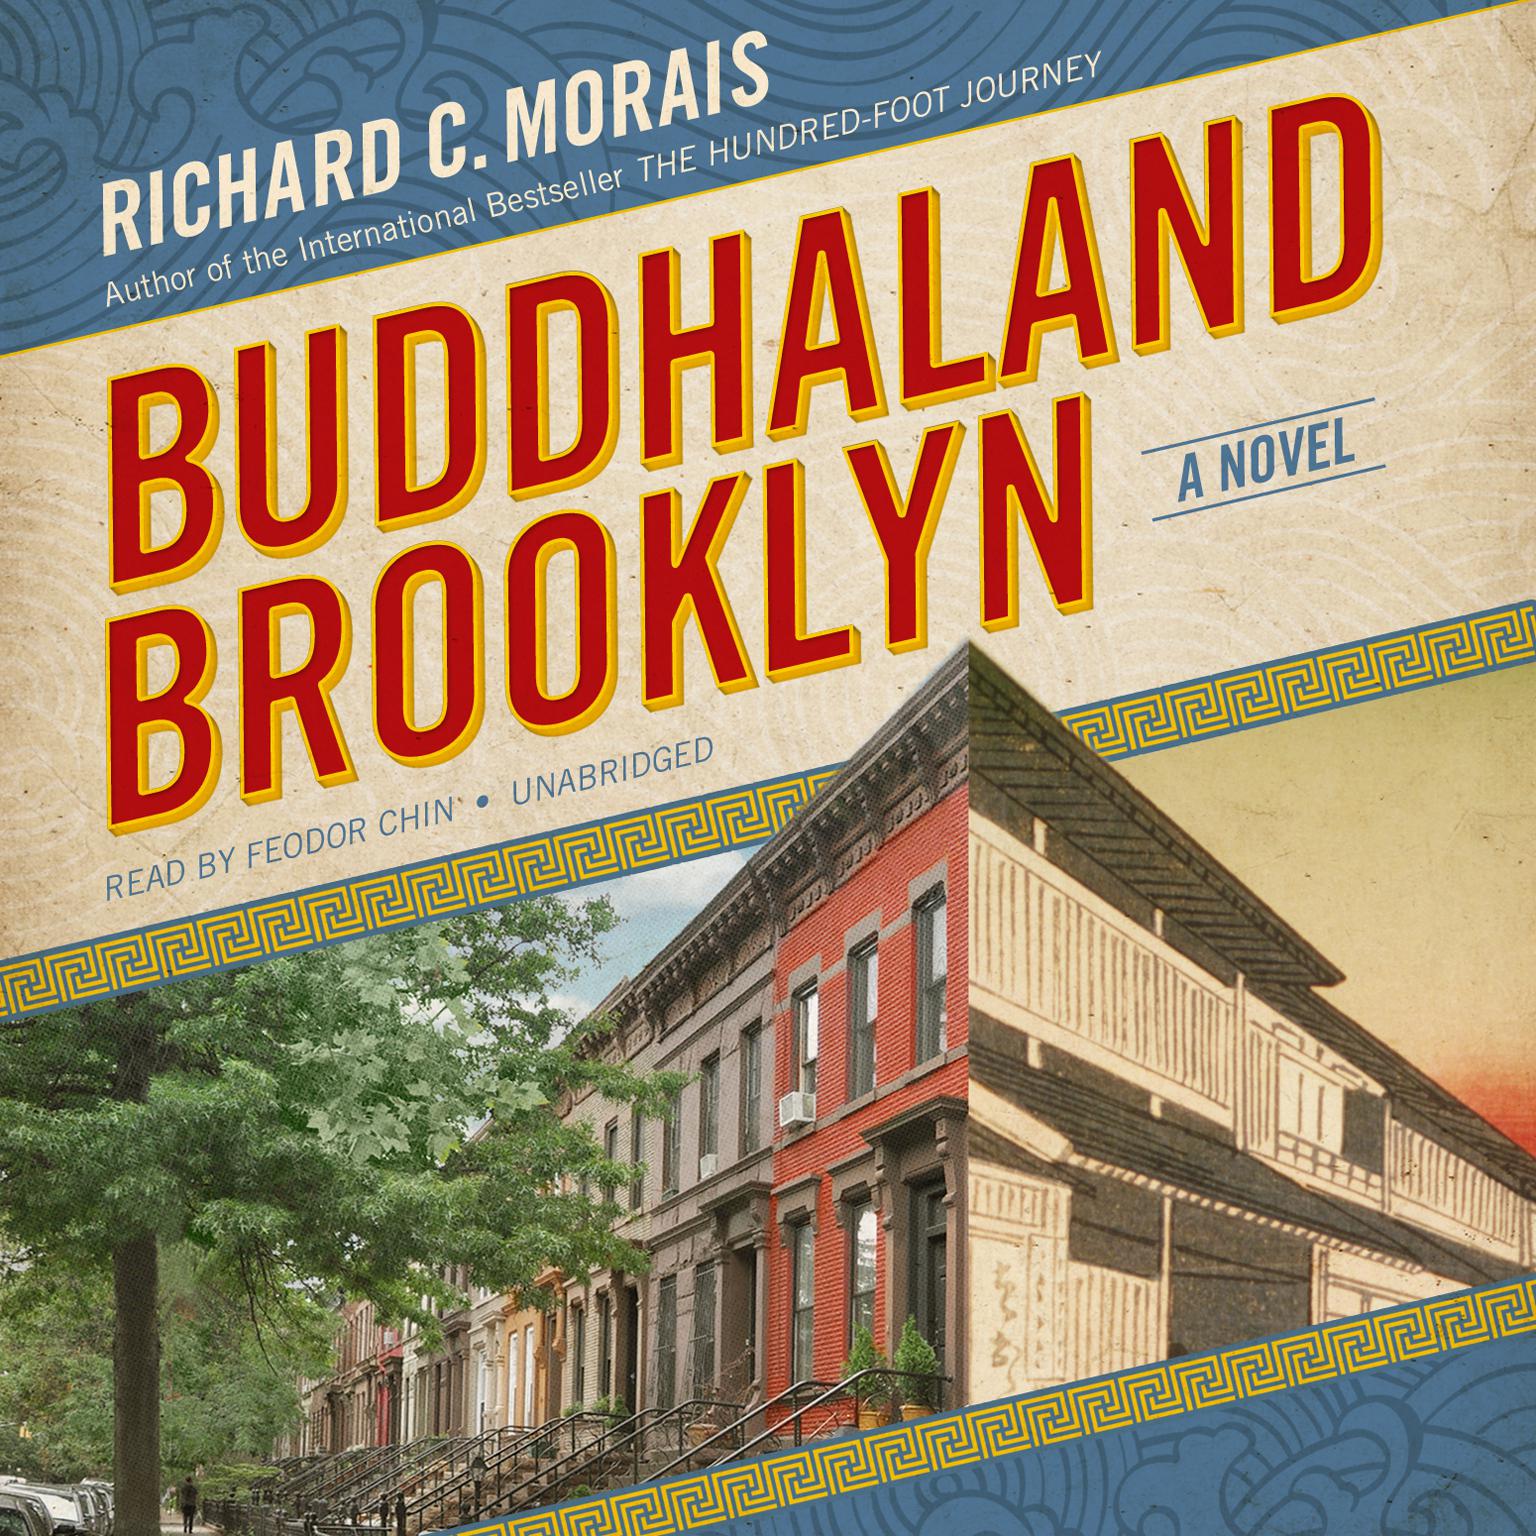 Buddhaland Brooklyn: A Novel Audiobook, by Richard C. Morais